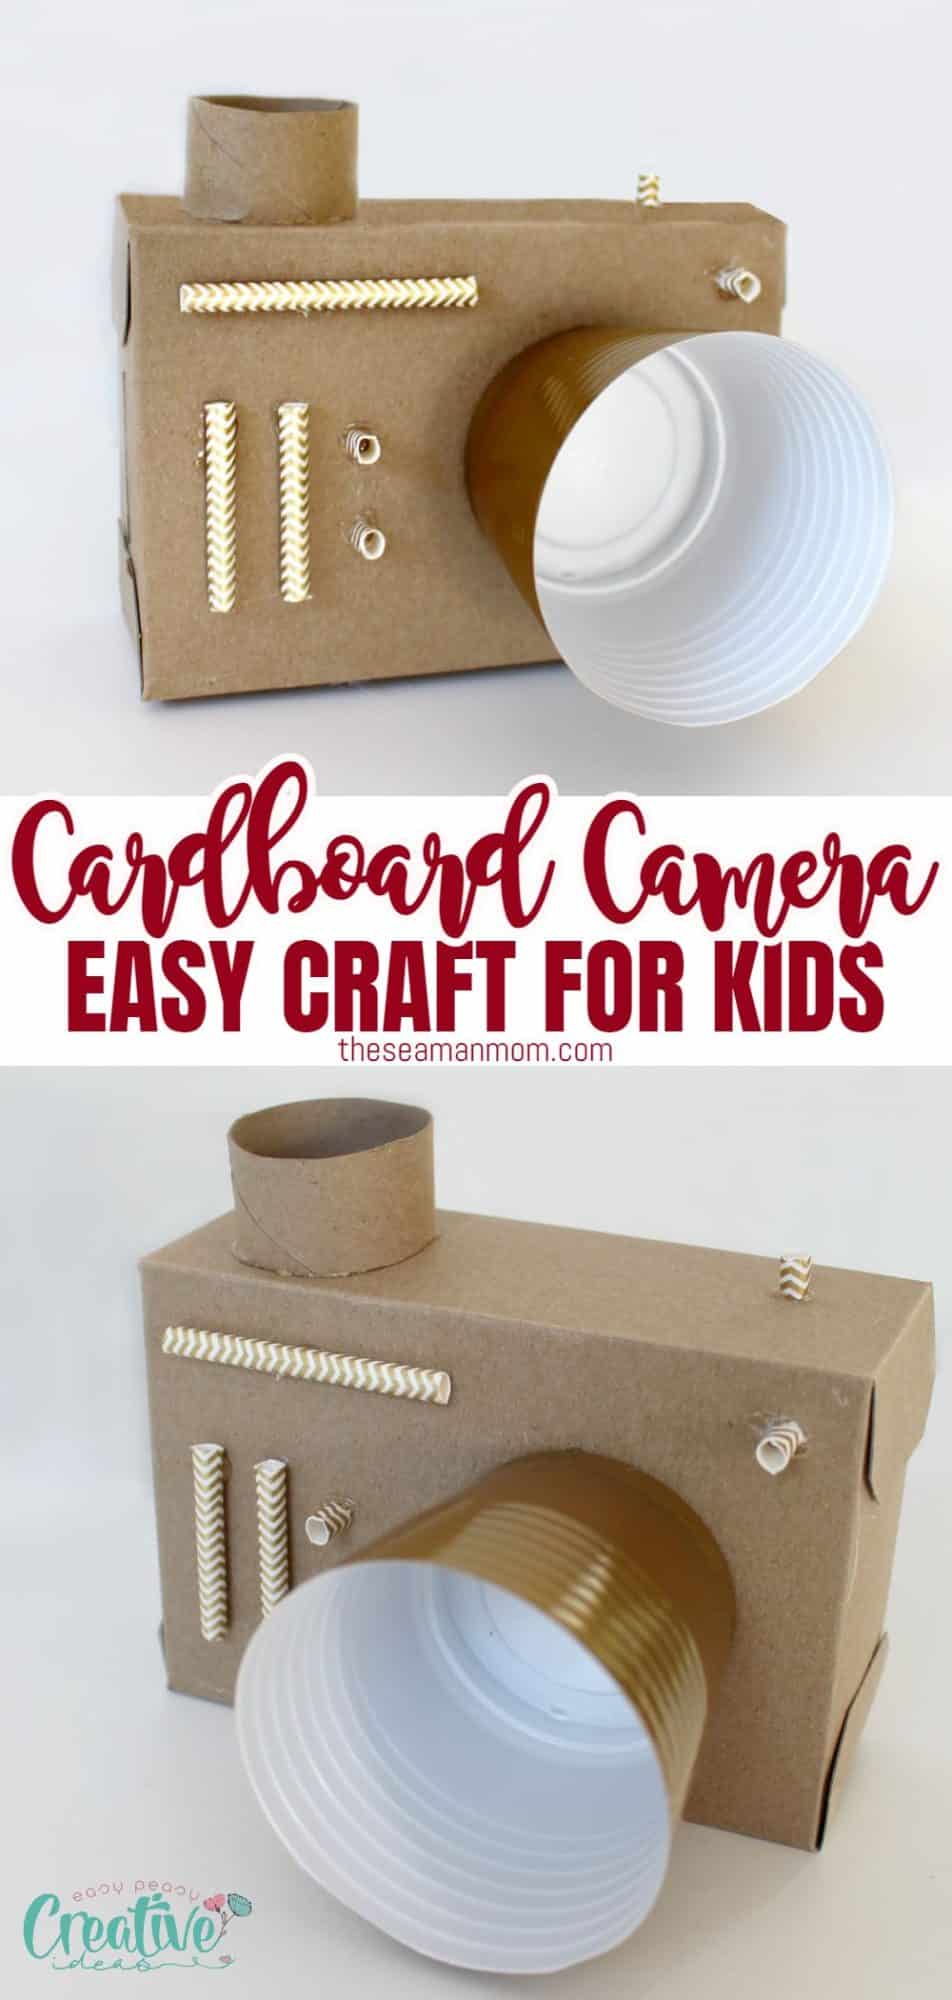 Cardboard camera craft for kids